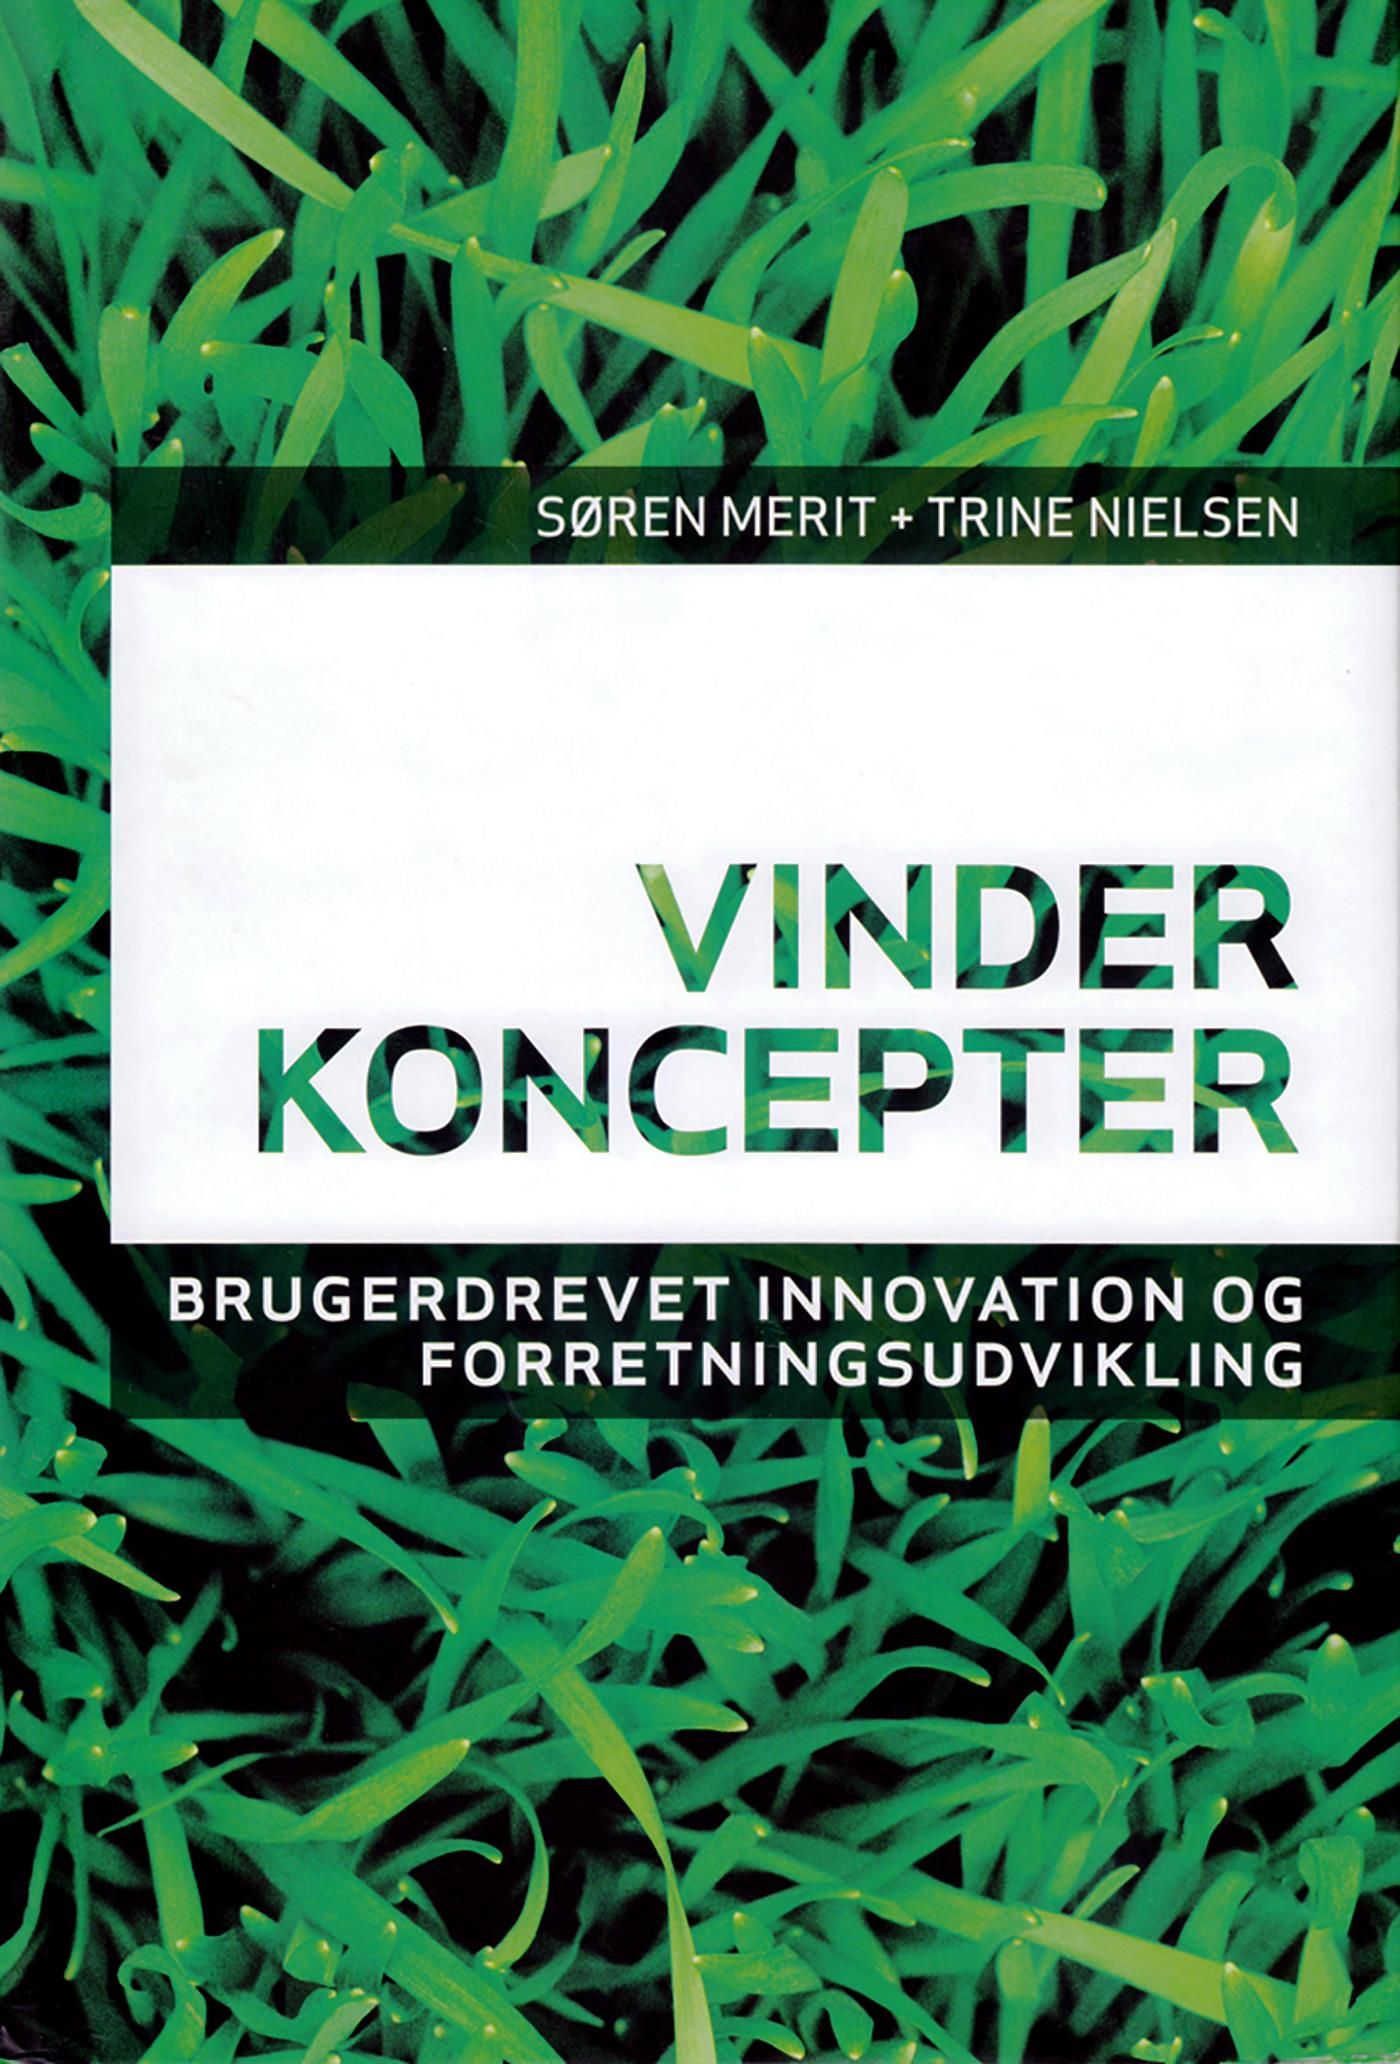 Vinderkoncepter, eBook by Søren Merit, Trine Nielsen